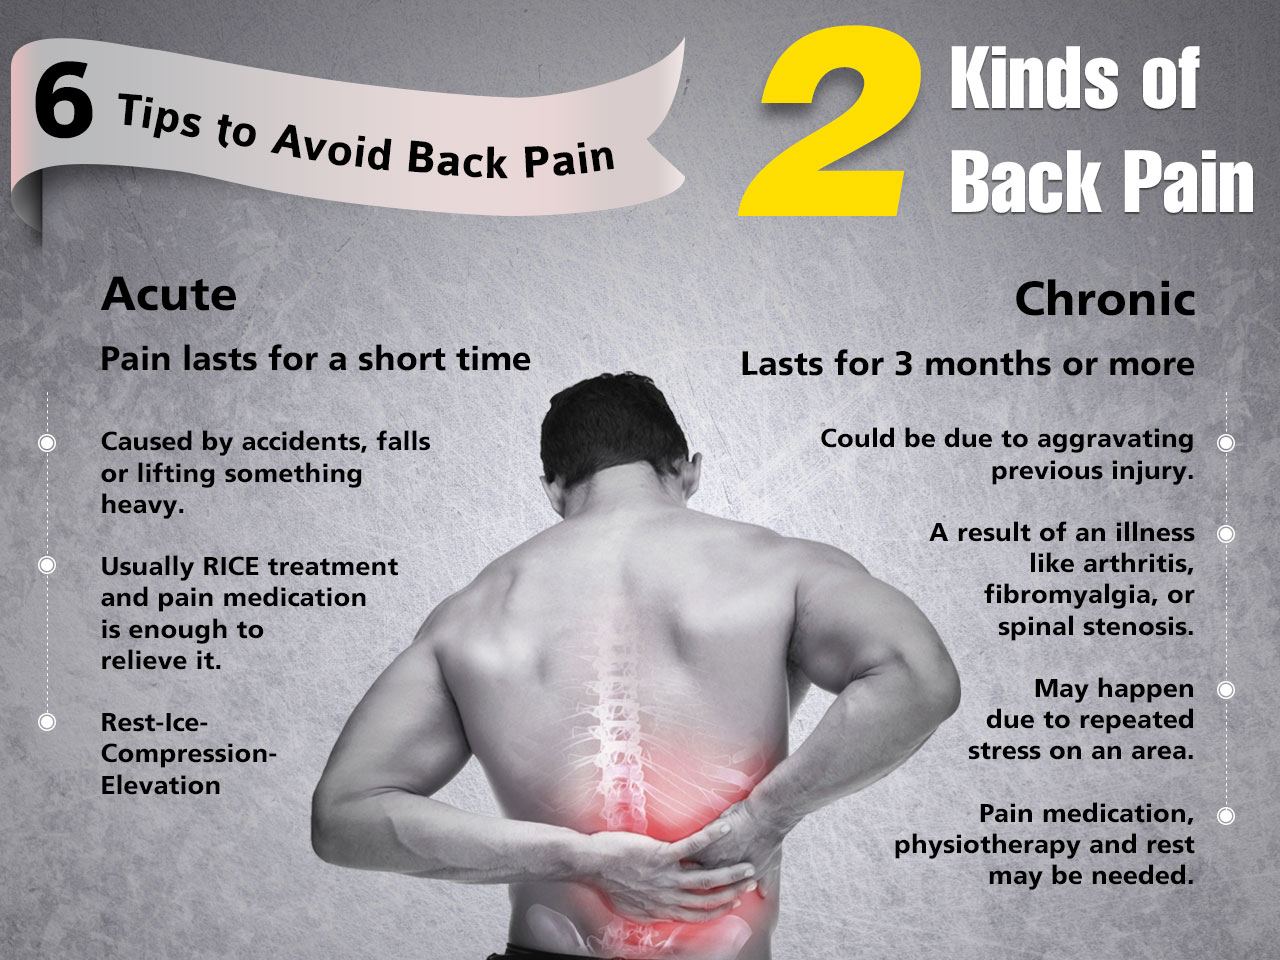 https://kauveryhospital.com/blog/wp-content/uploads/2017/06/tips-to-avoid-back-pain.jpg